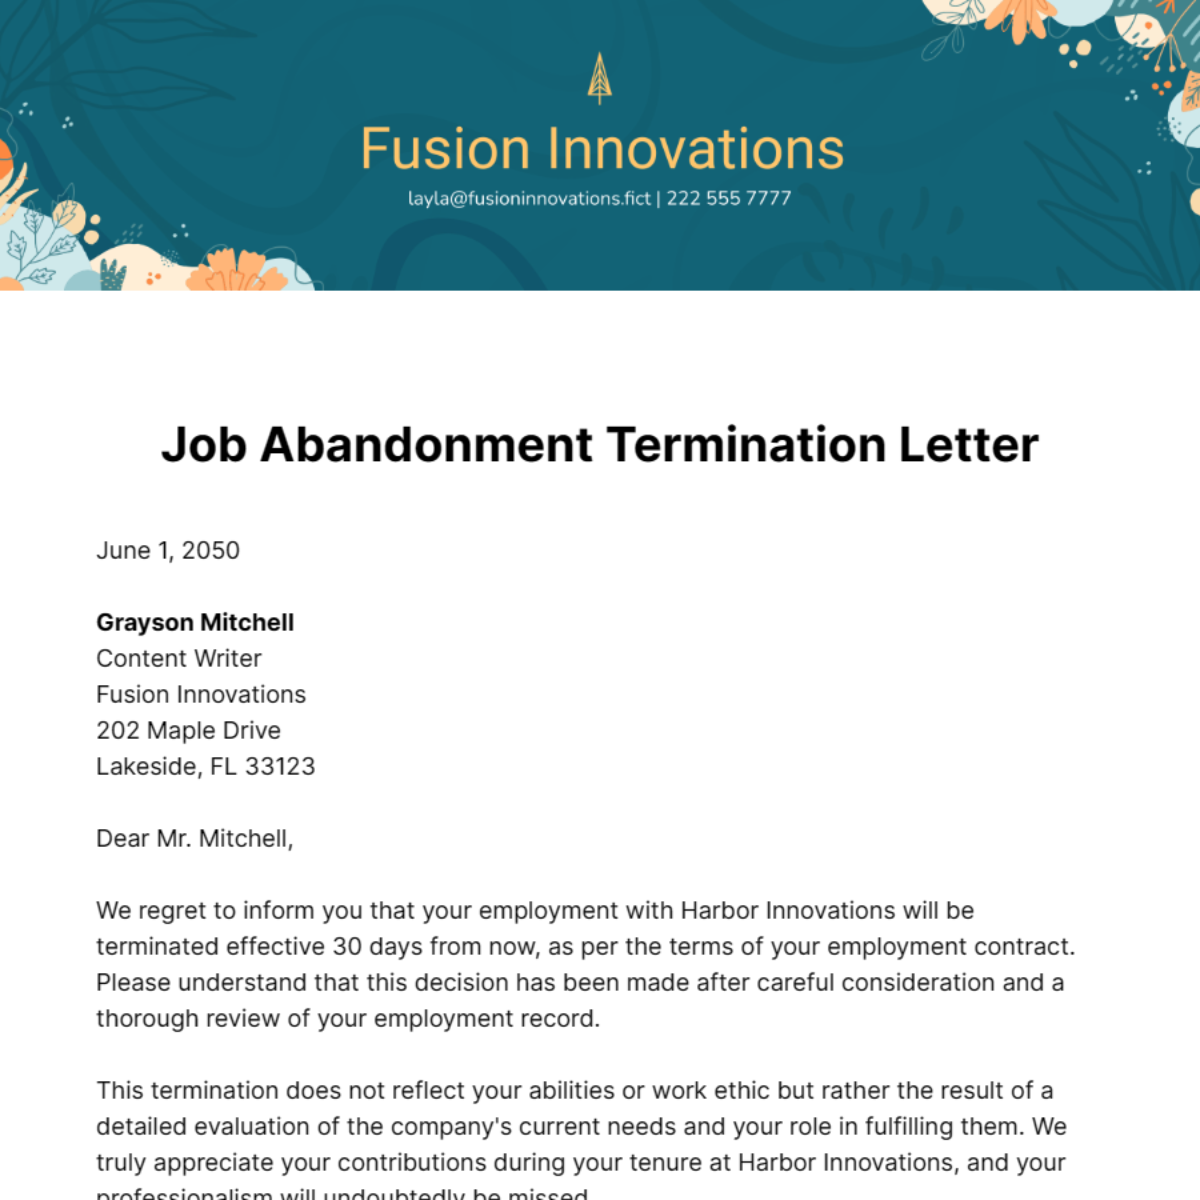 Job Abandonment Termination Letter Template